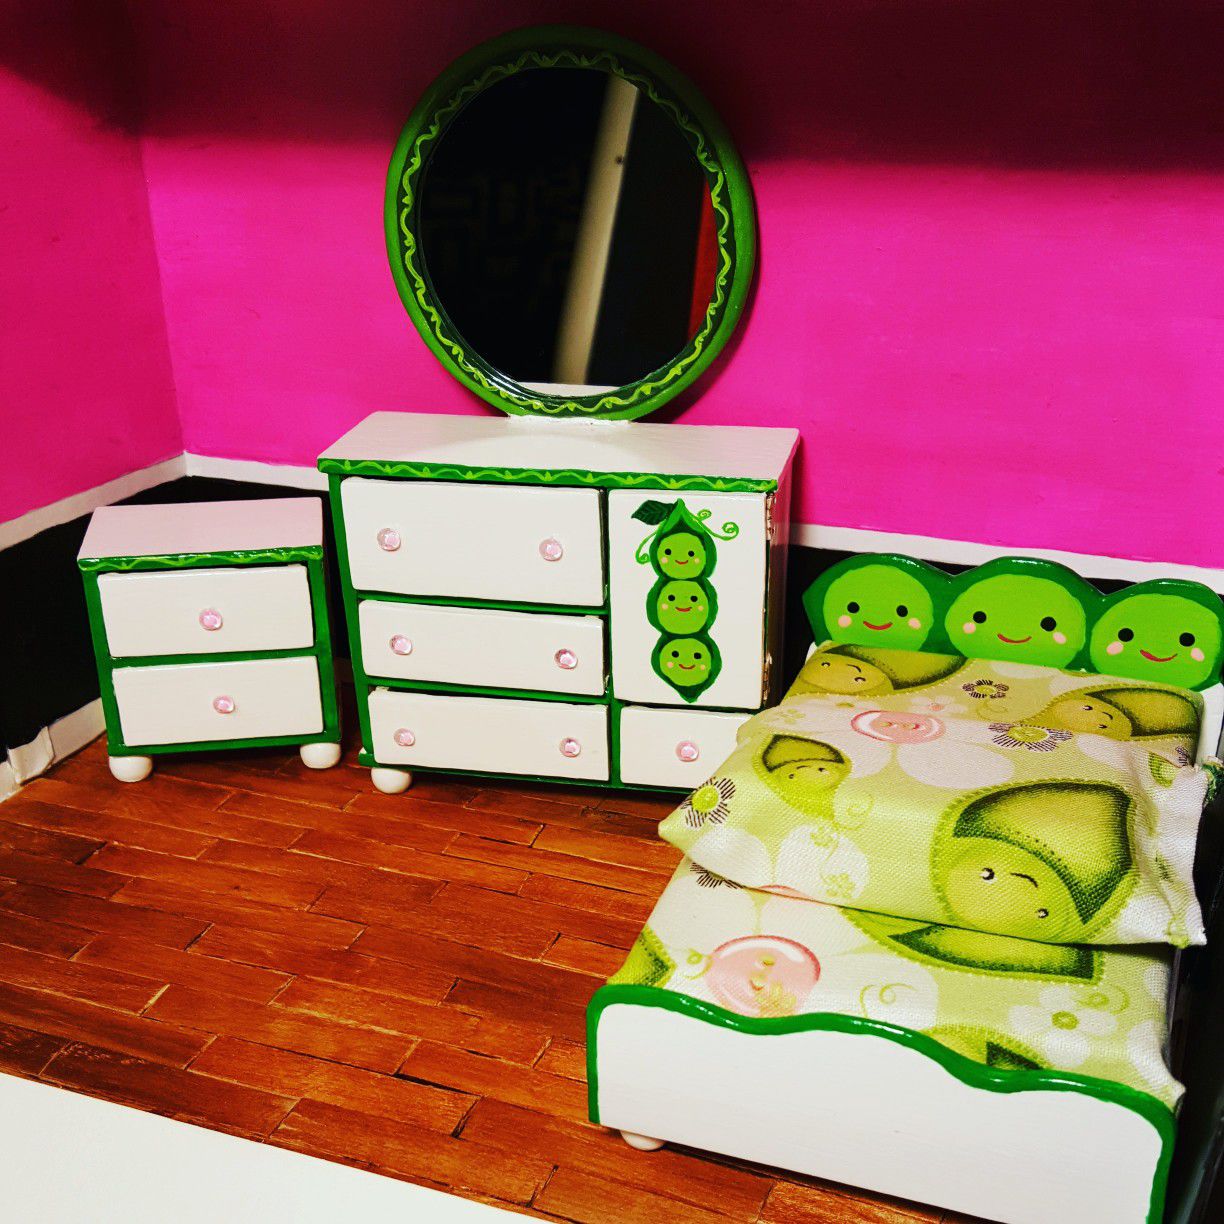 Peas in a pod dollhouse set